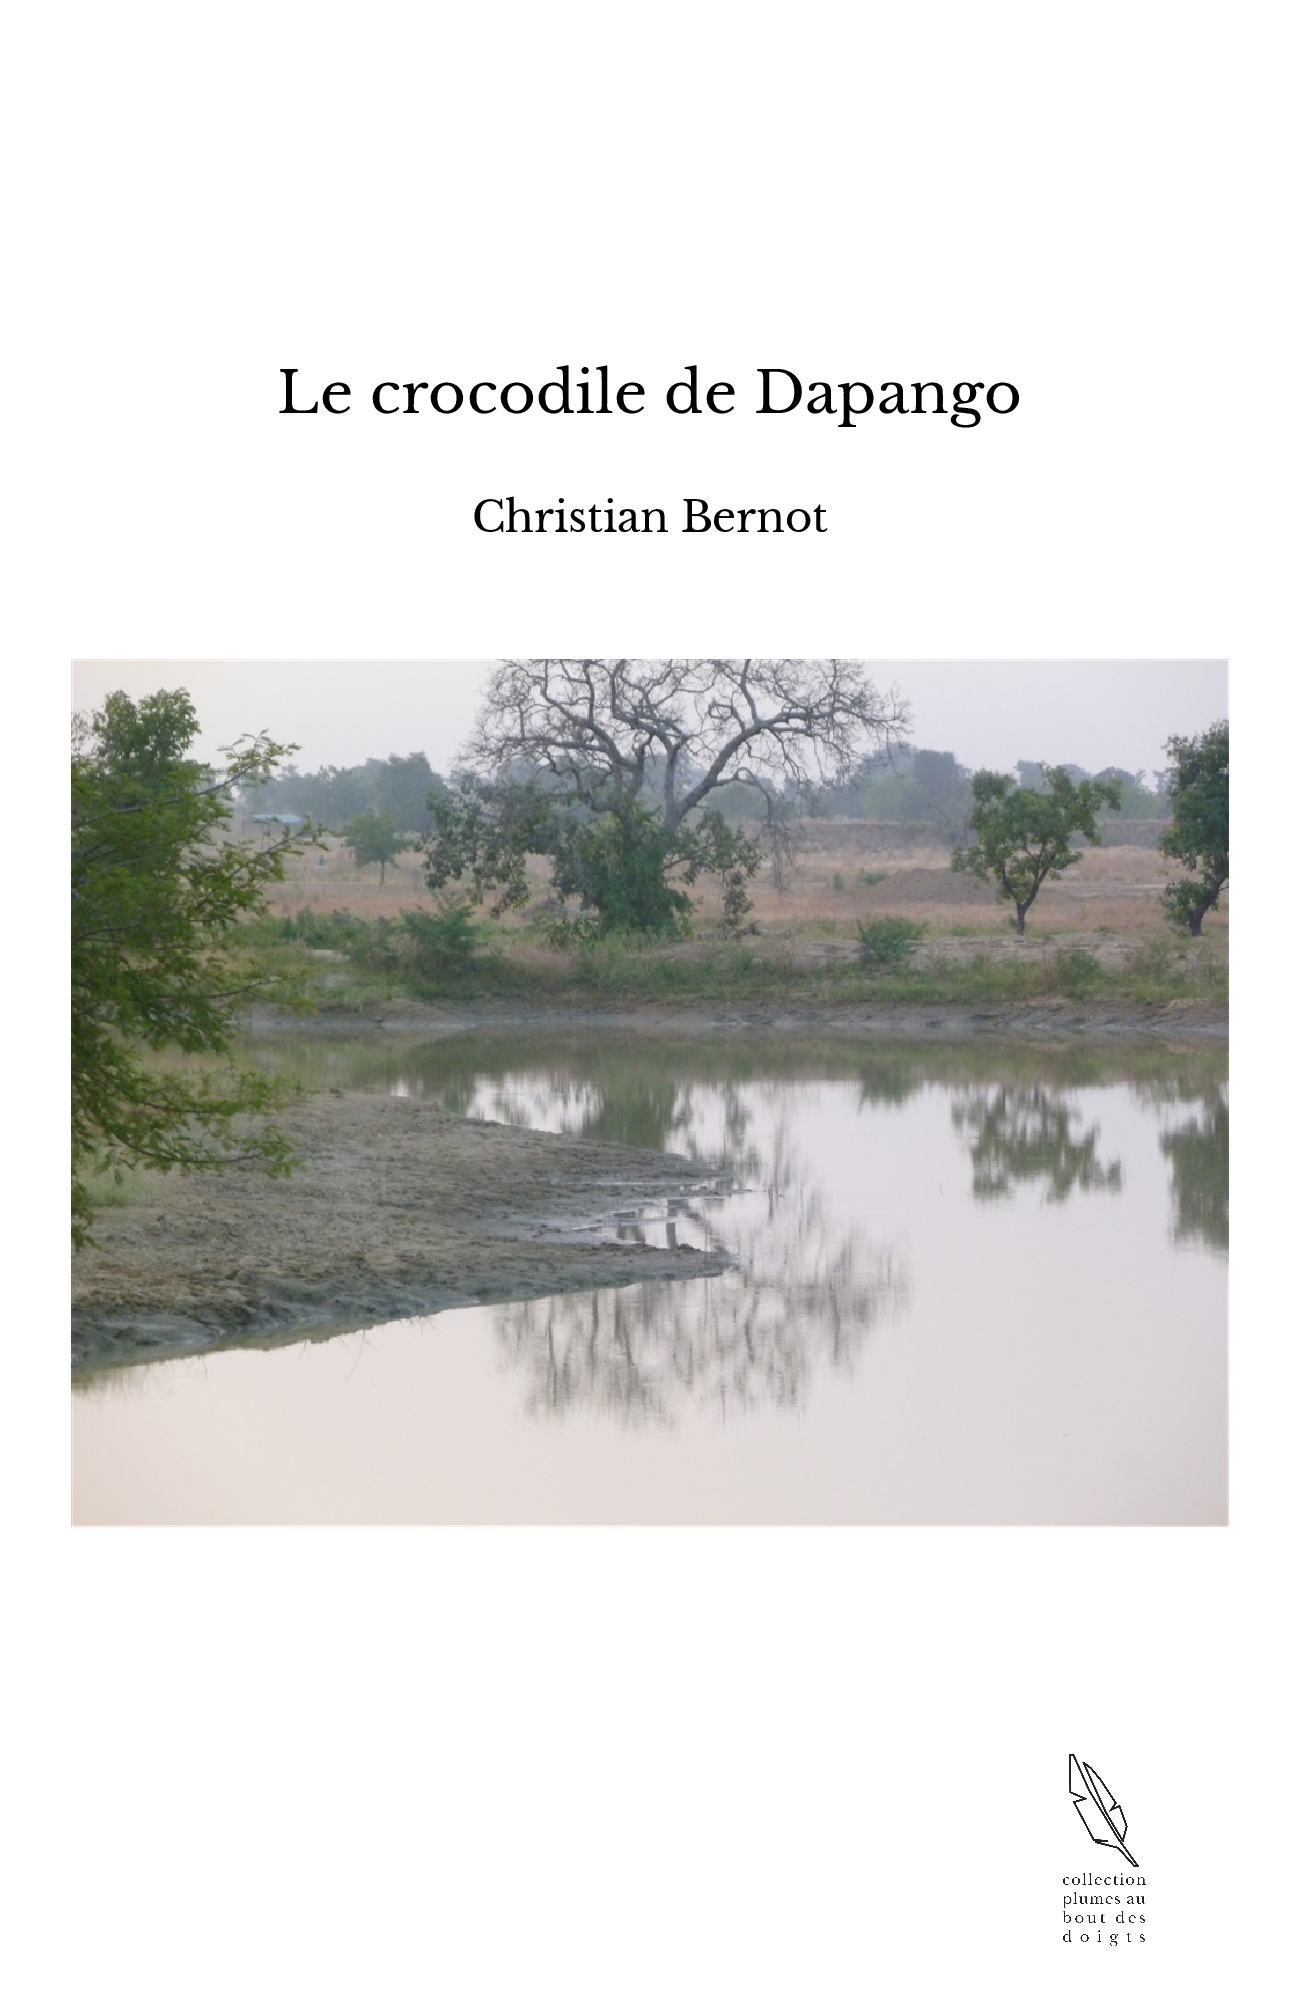 Le crocodile de Dapango